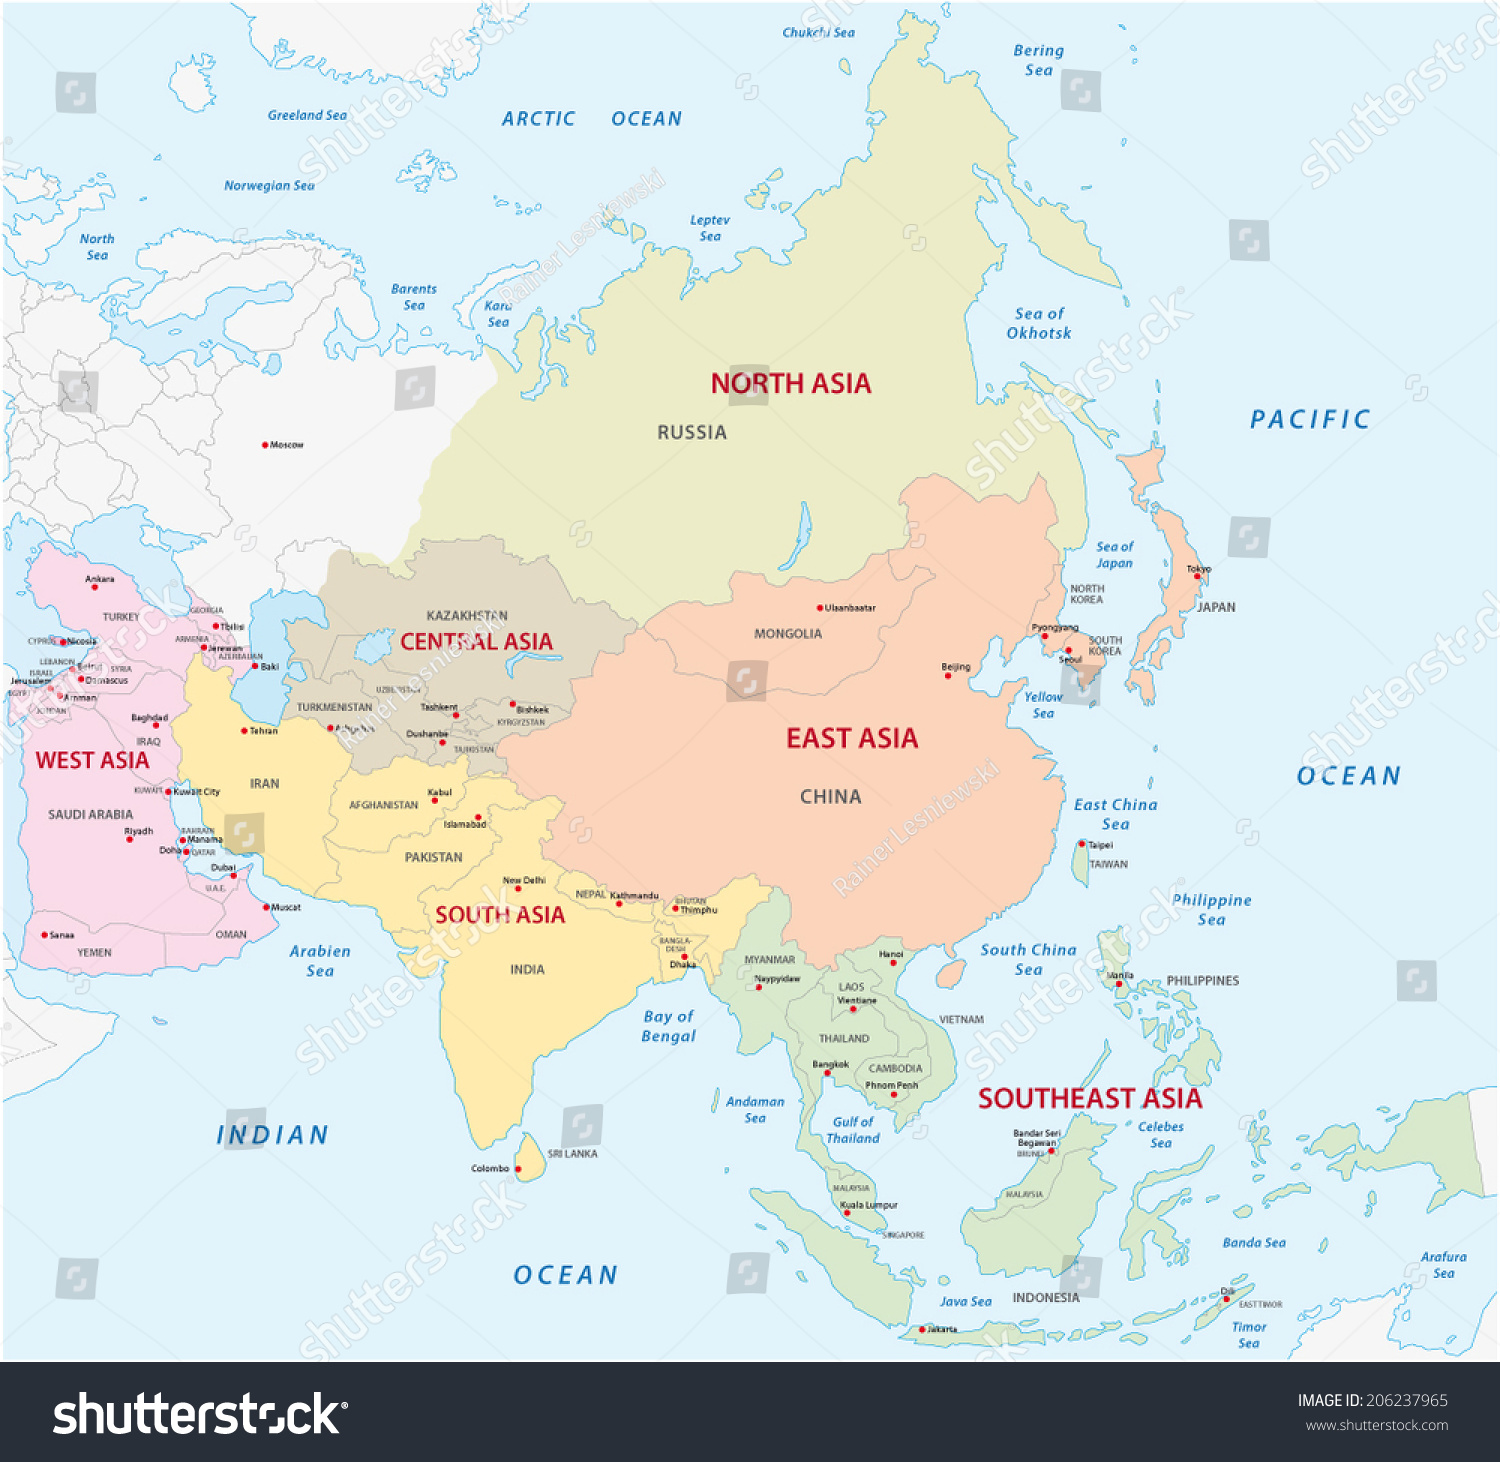 Map Of The Asian Sub-Regions Stock Vector Illustration 206237965 ...